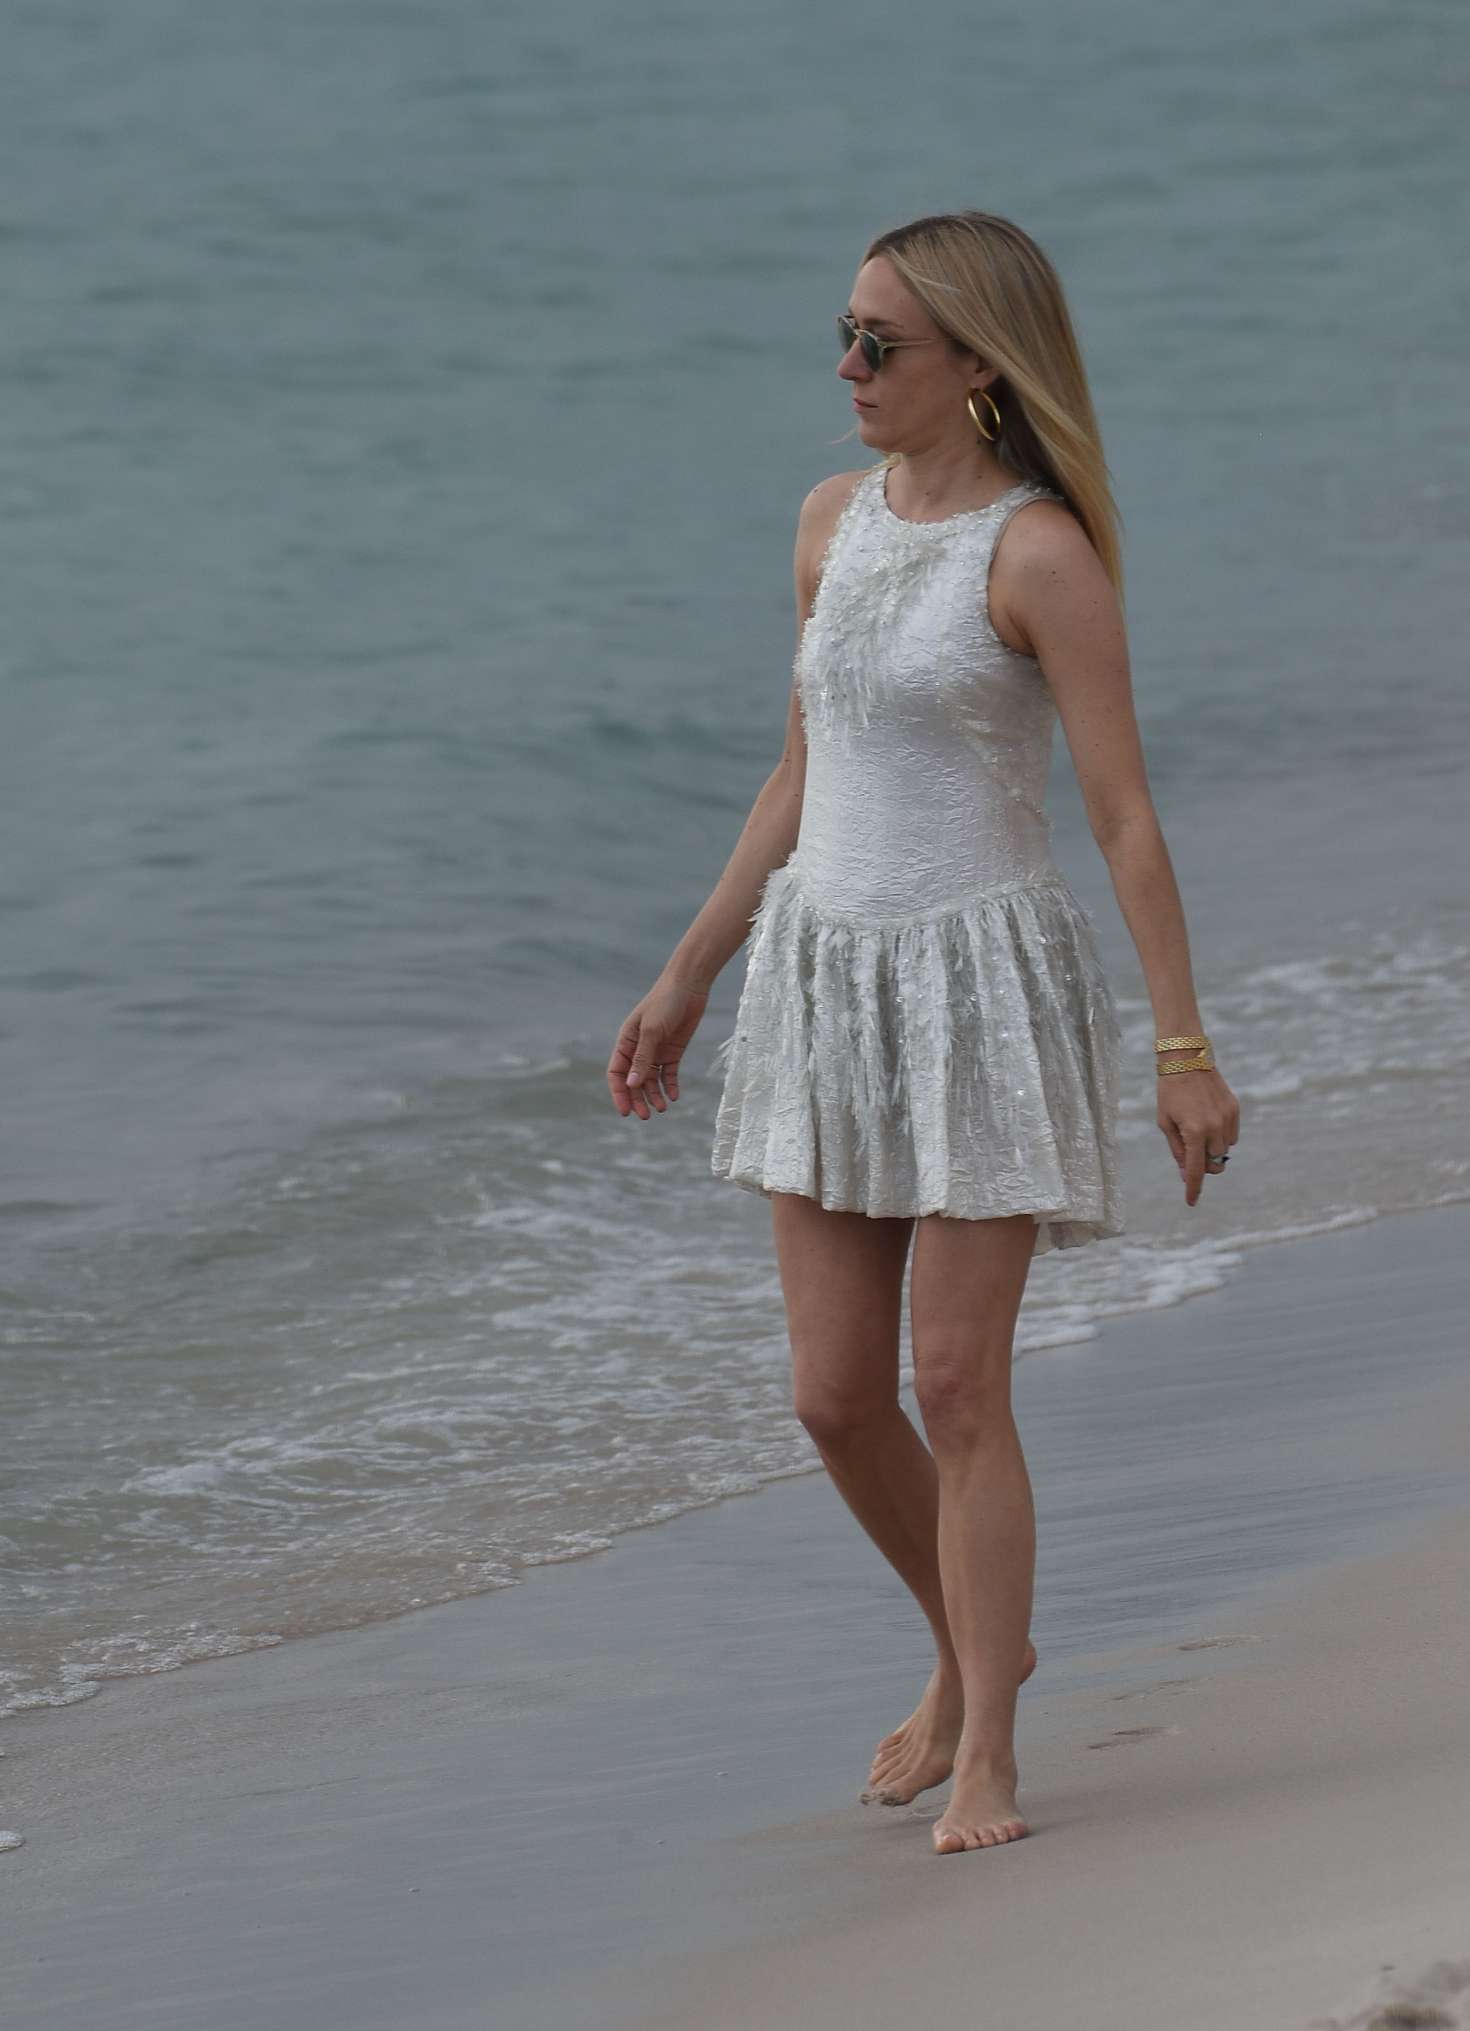 Chloe Sevigny in White Mini Dress on the beach in Cannes